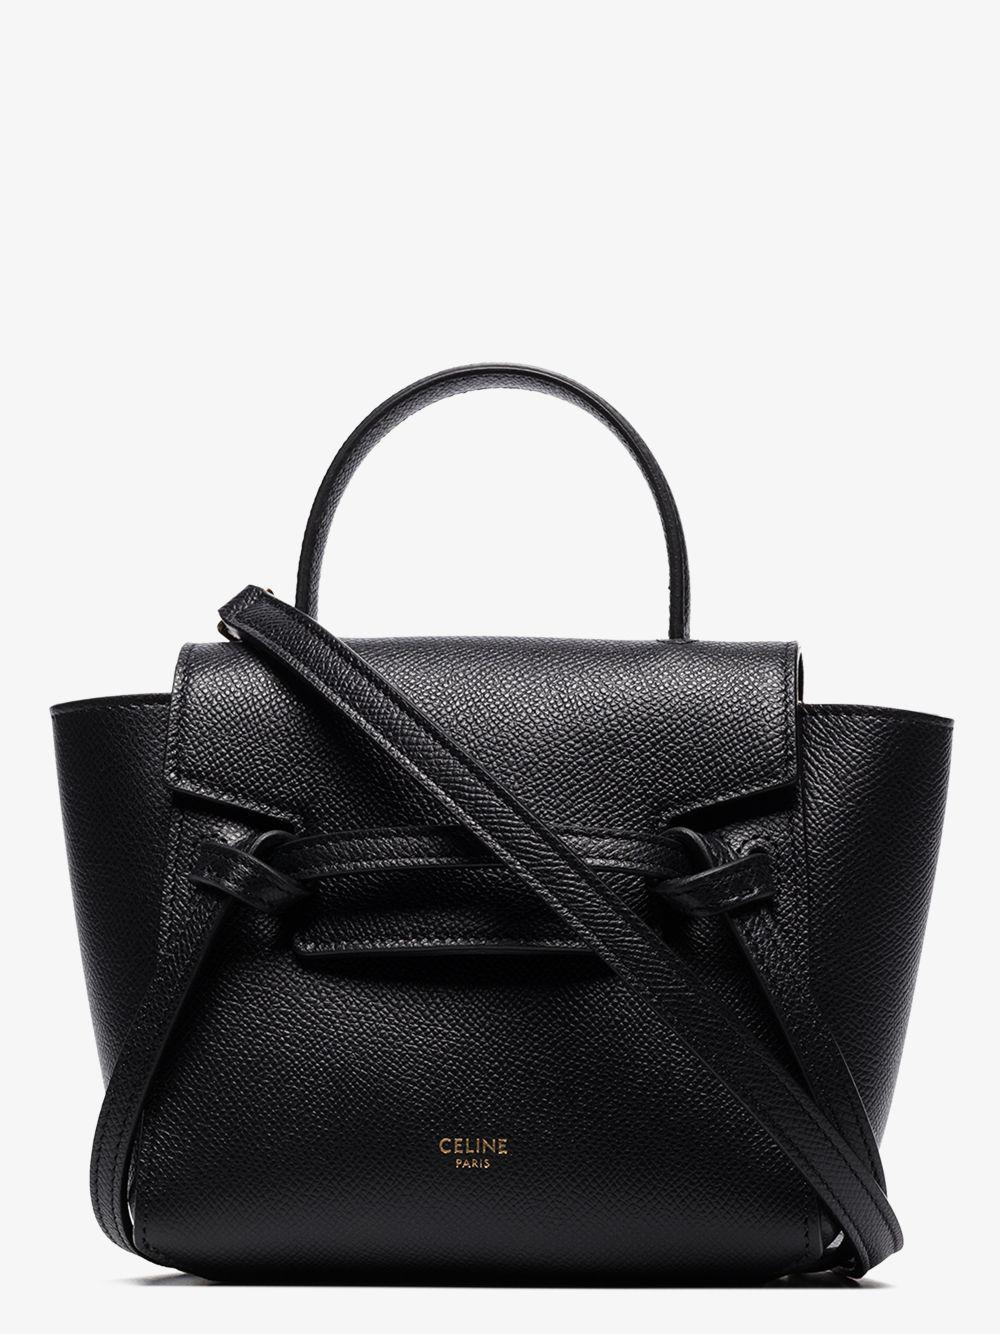 Me Loves Luxury - ❌SOLD❌ NEW Celine Pico Belt Bag Black